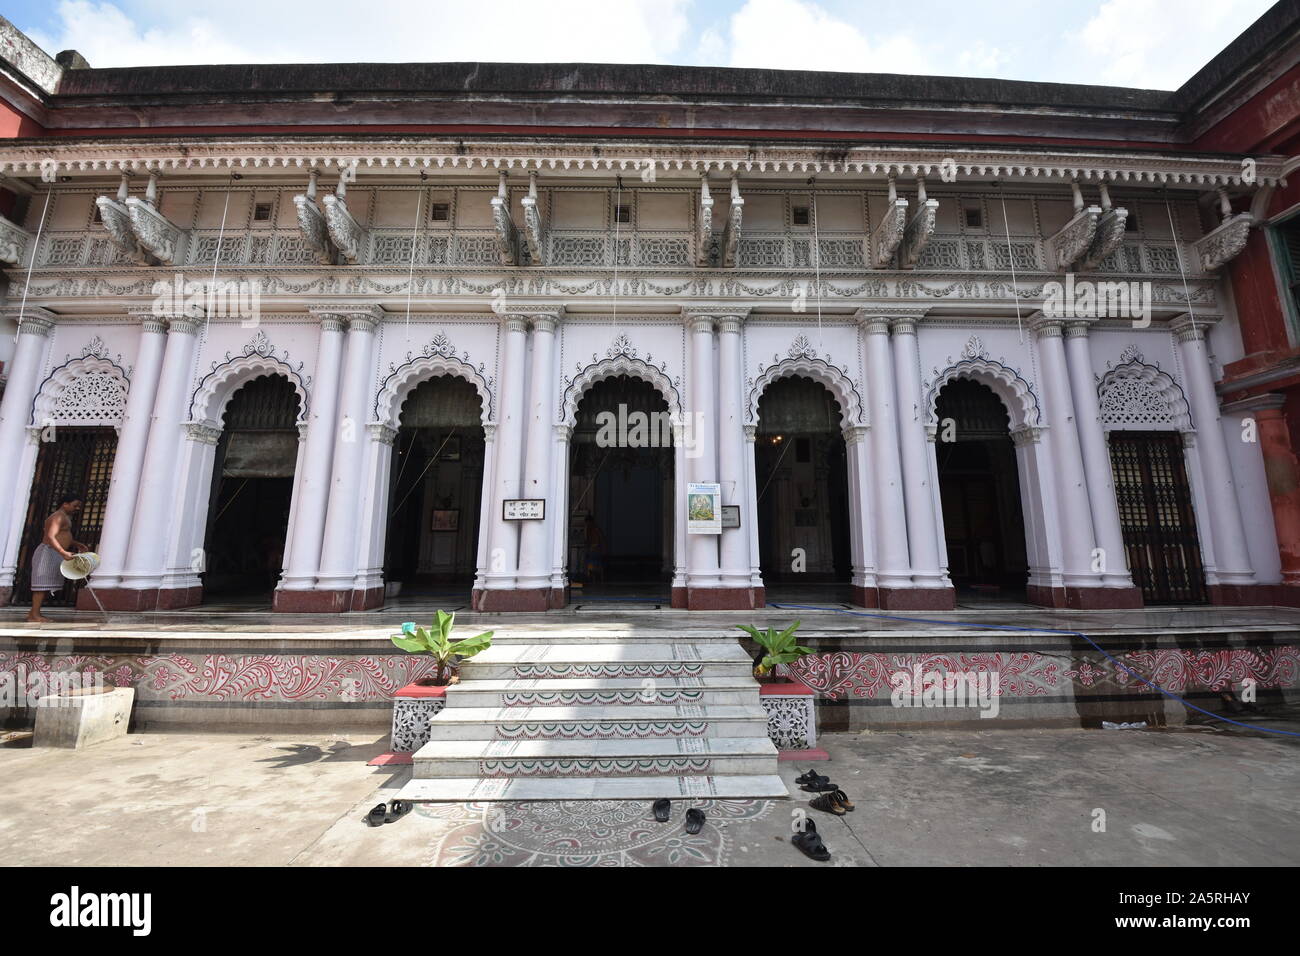 Le Shobhabazar Durga Dalan du Palais Royal (Gopinath Bari). 36 Nabakrishna Raja Street. Kolkata, Bengale occidental, Inde. Banque D'Images